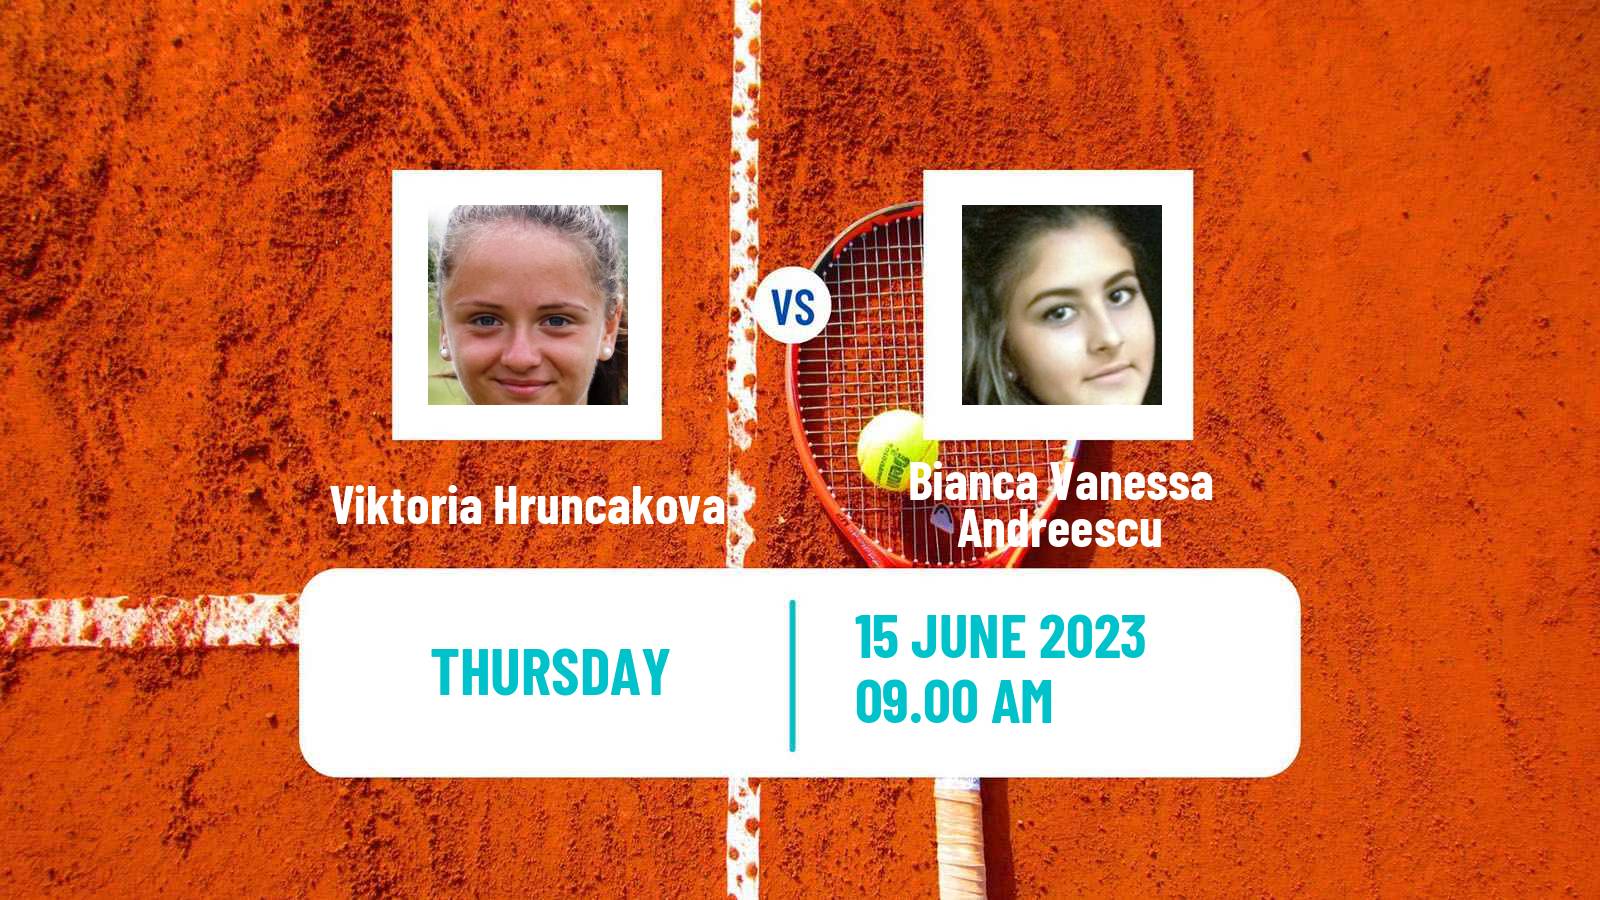 Tennis WTA Hertogenbosch Viktoria Hruncakova - Bianca Vanessa Andreescu